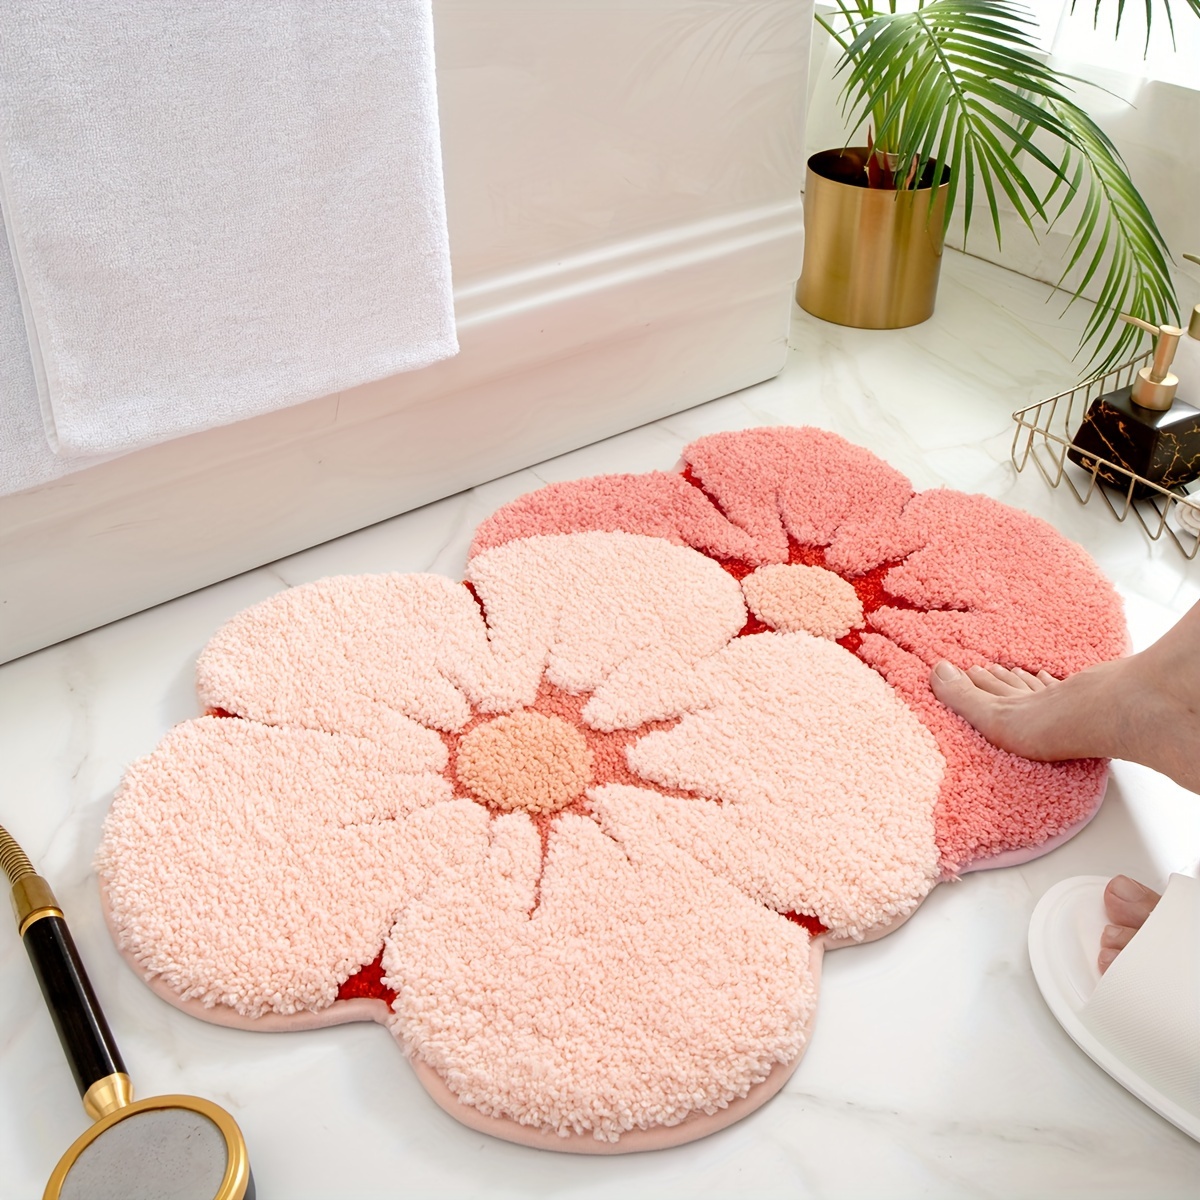 

1pc Floral Shaped Plush Bath Mat, Flower Silhouette Design, Non-slip, Cozy Bathroom Floor Rug, Multiple Sizes